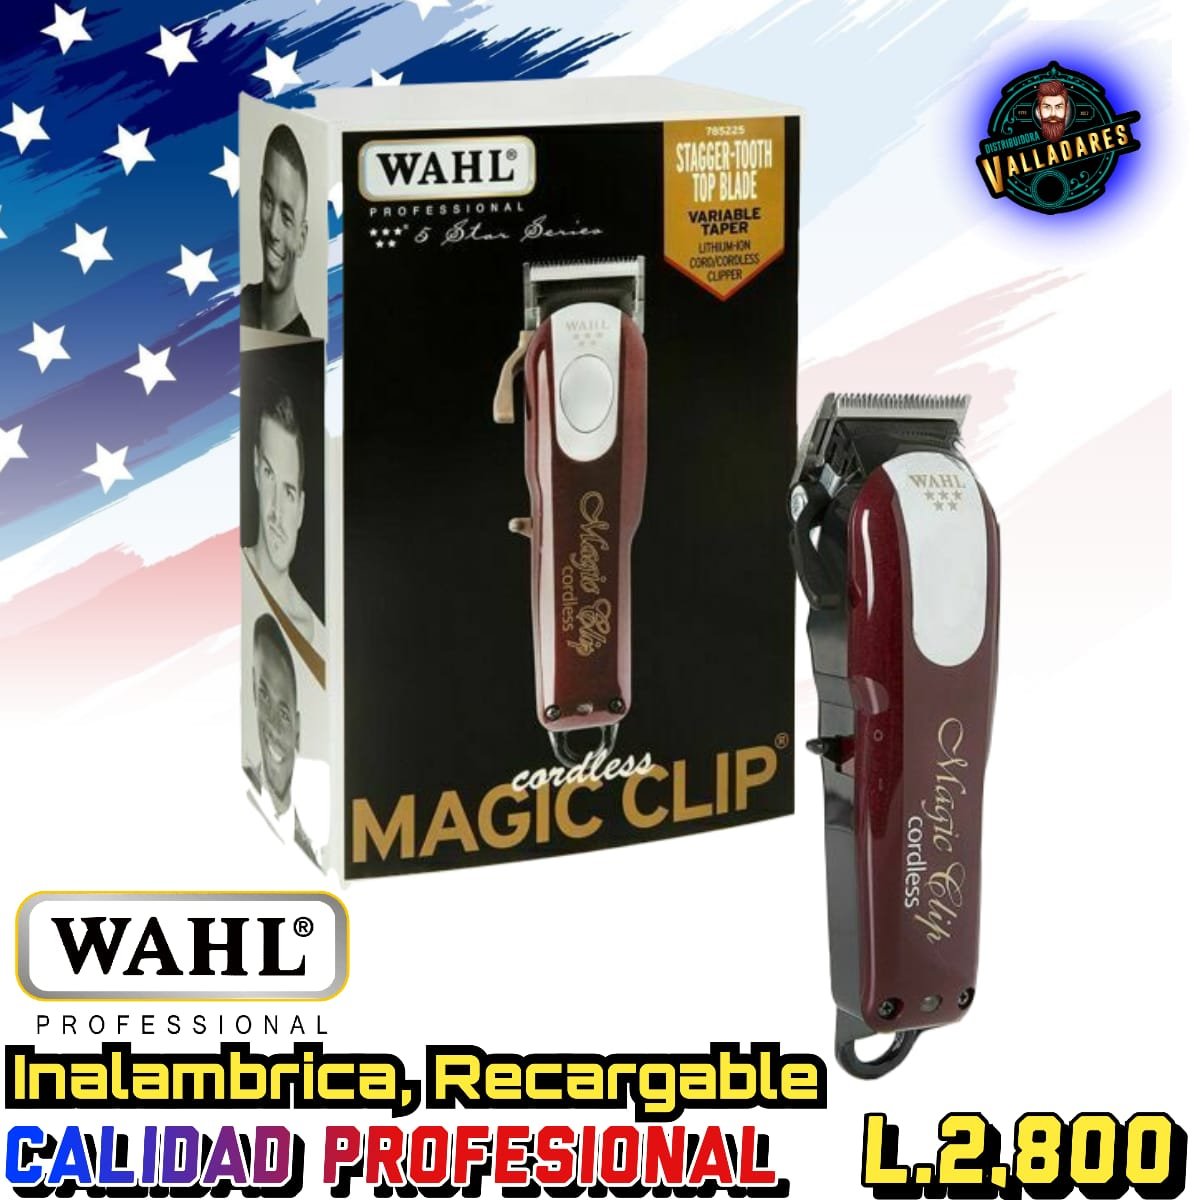 Wahl Magic clip 5 estrellas inalambrica recargable - Distribuidora